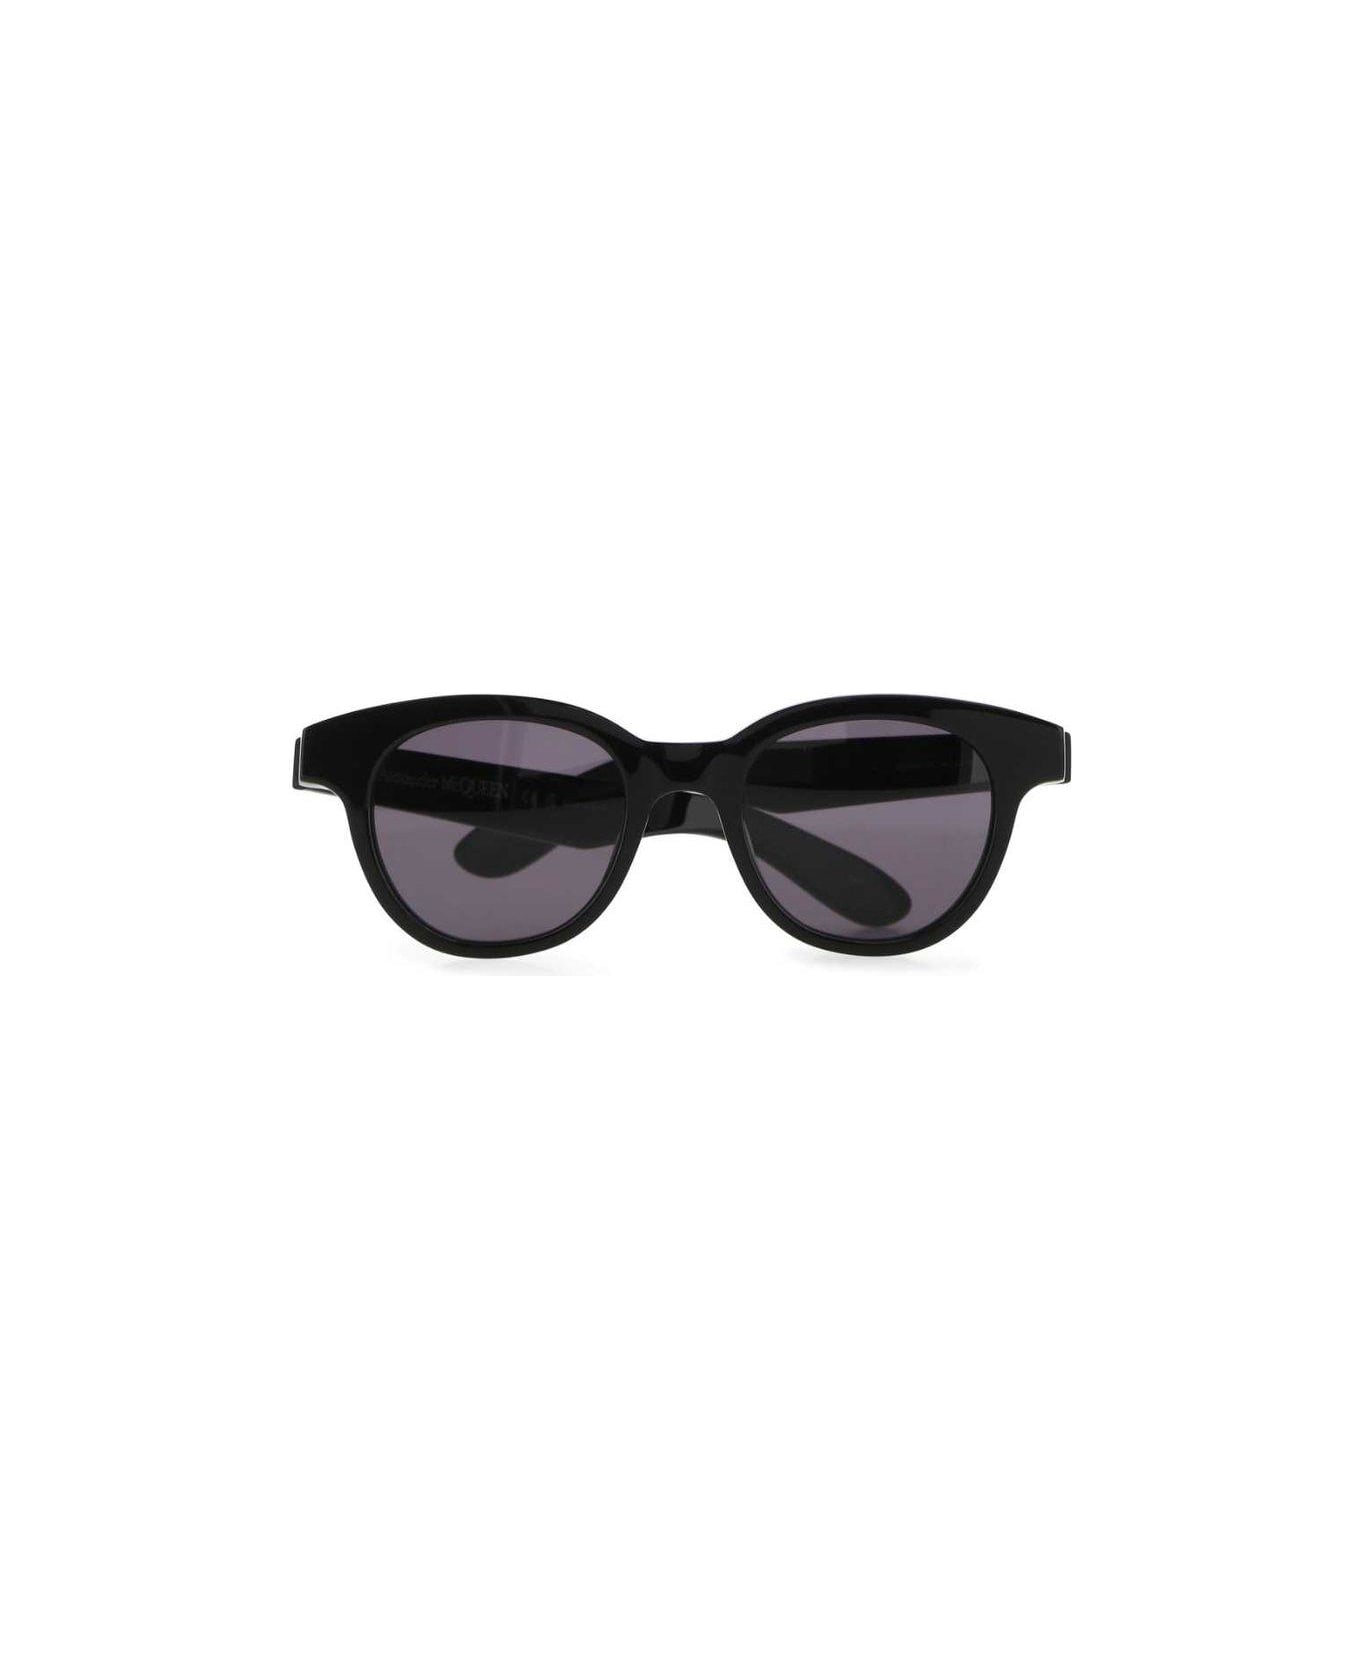 Alexander McQueen Square-frame Sunglasses - Black